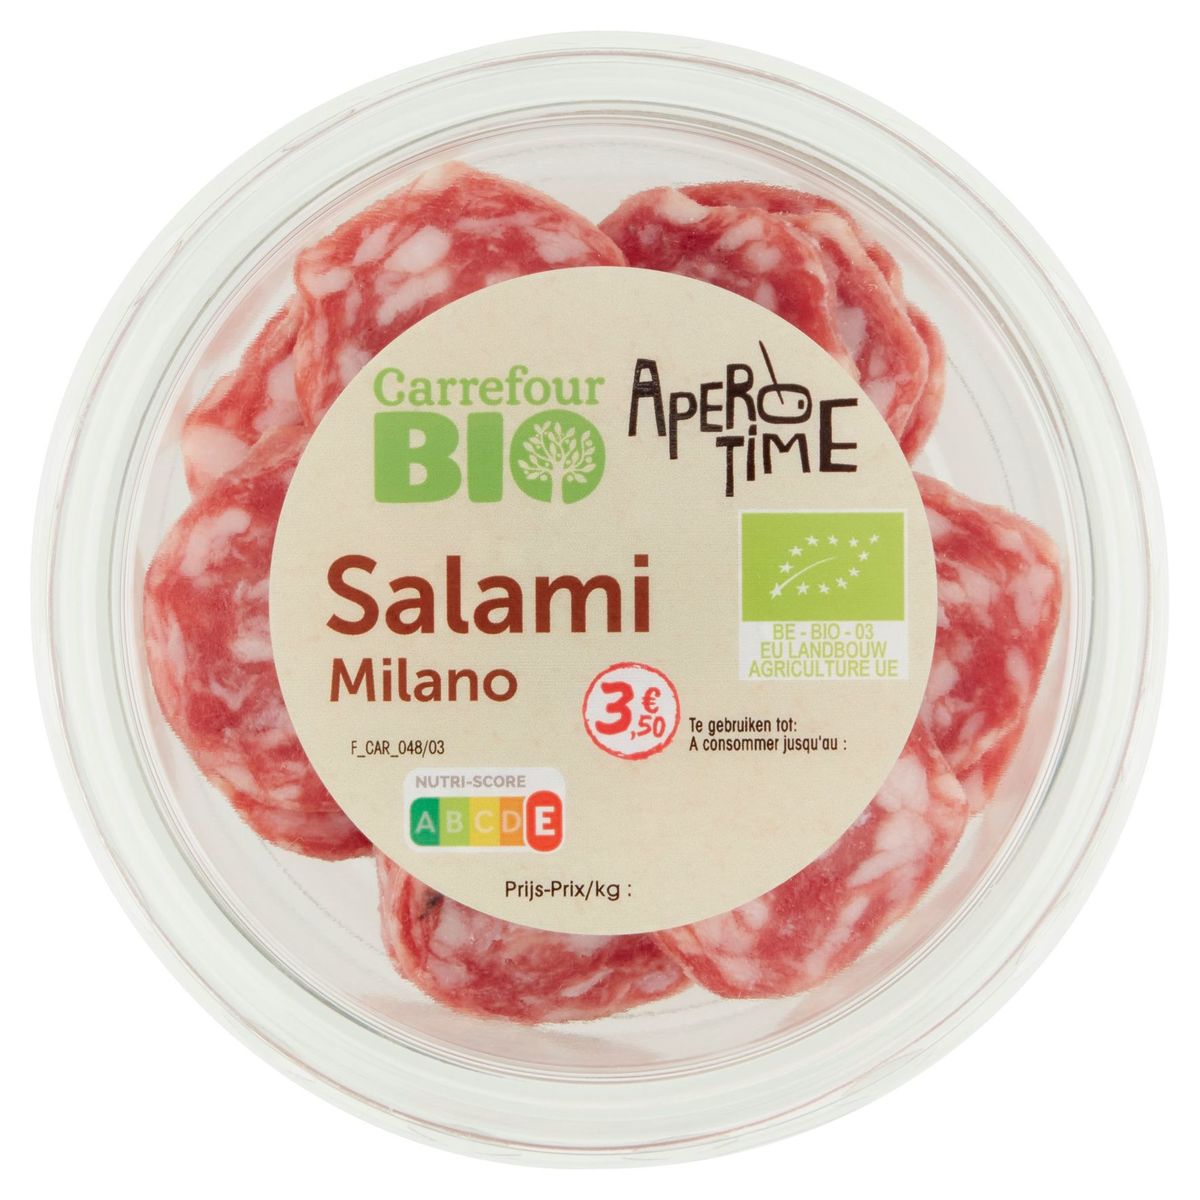 Carrefour Bio Apero Time Salami Milano 90 g